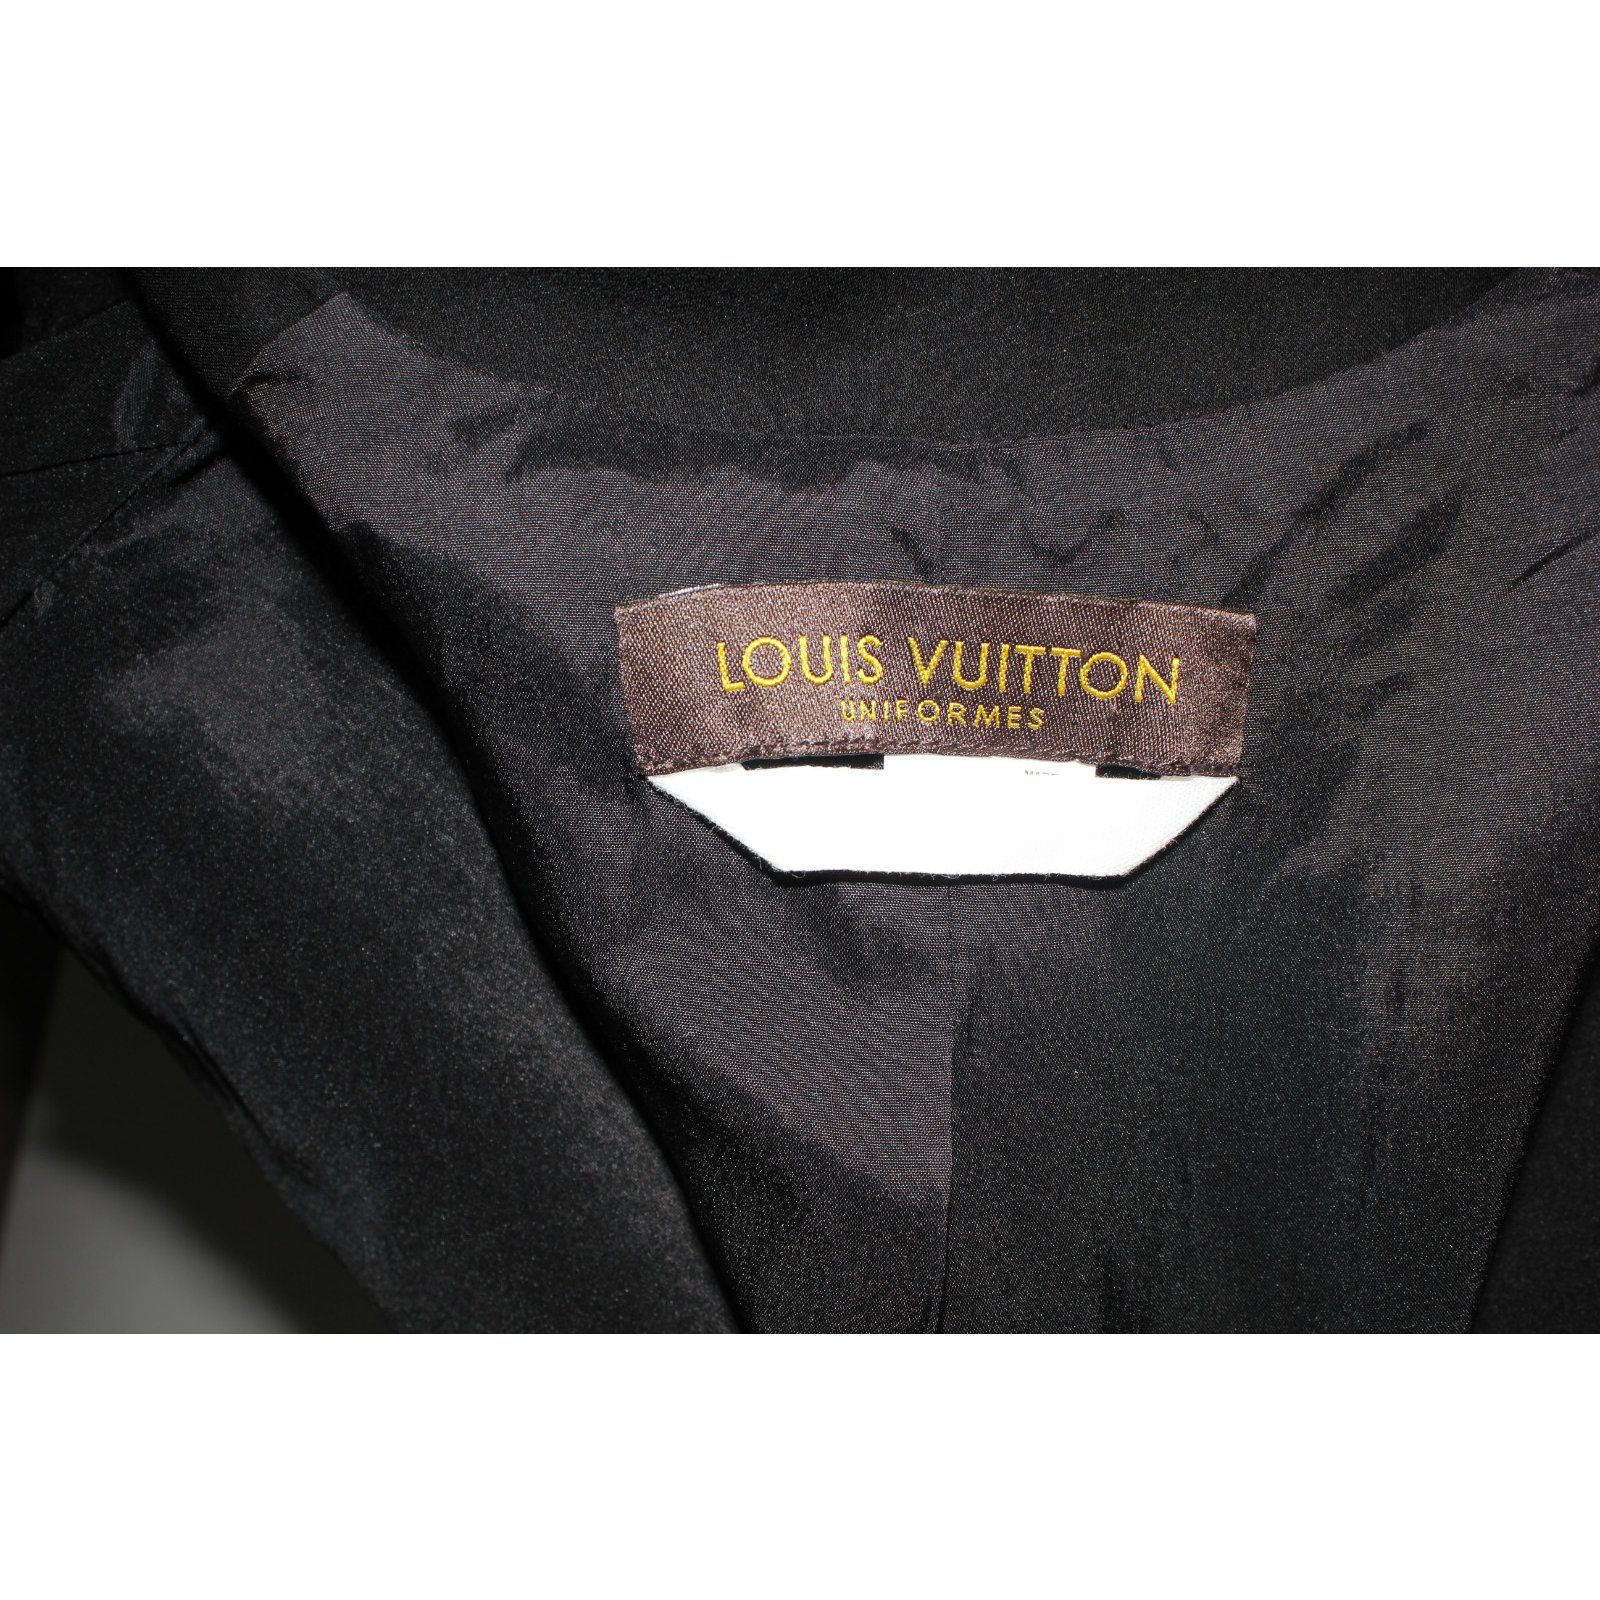 Louis Vuitton Uniforms Blazer - Black Jackets, Clothing